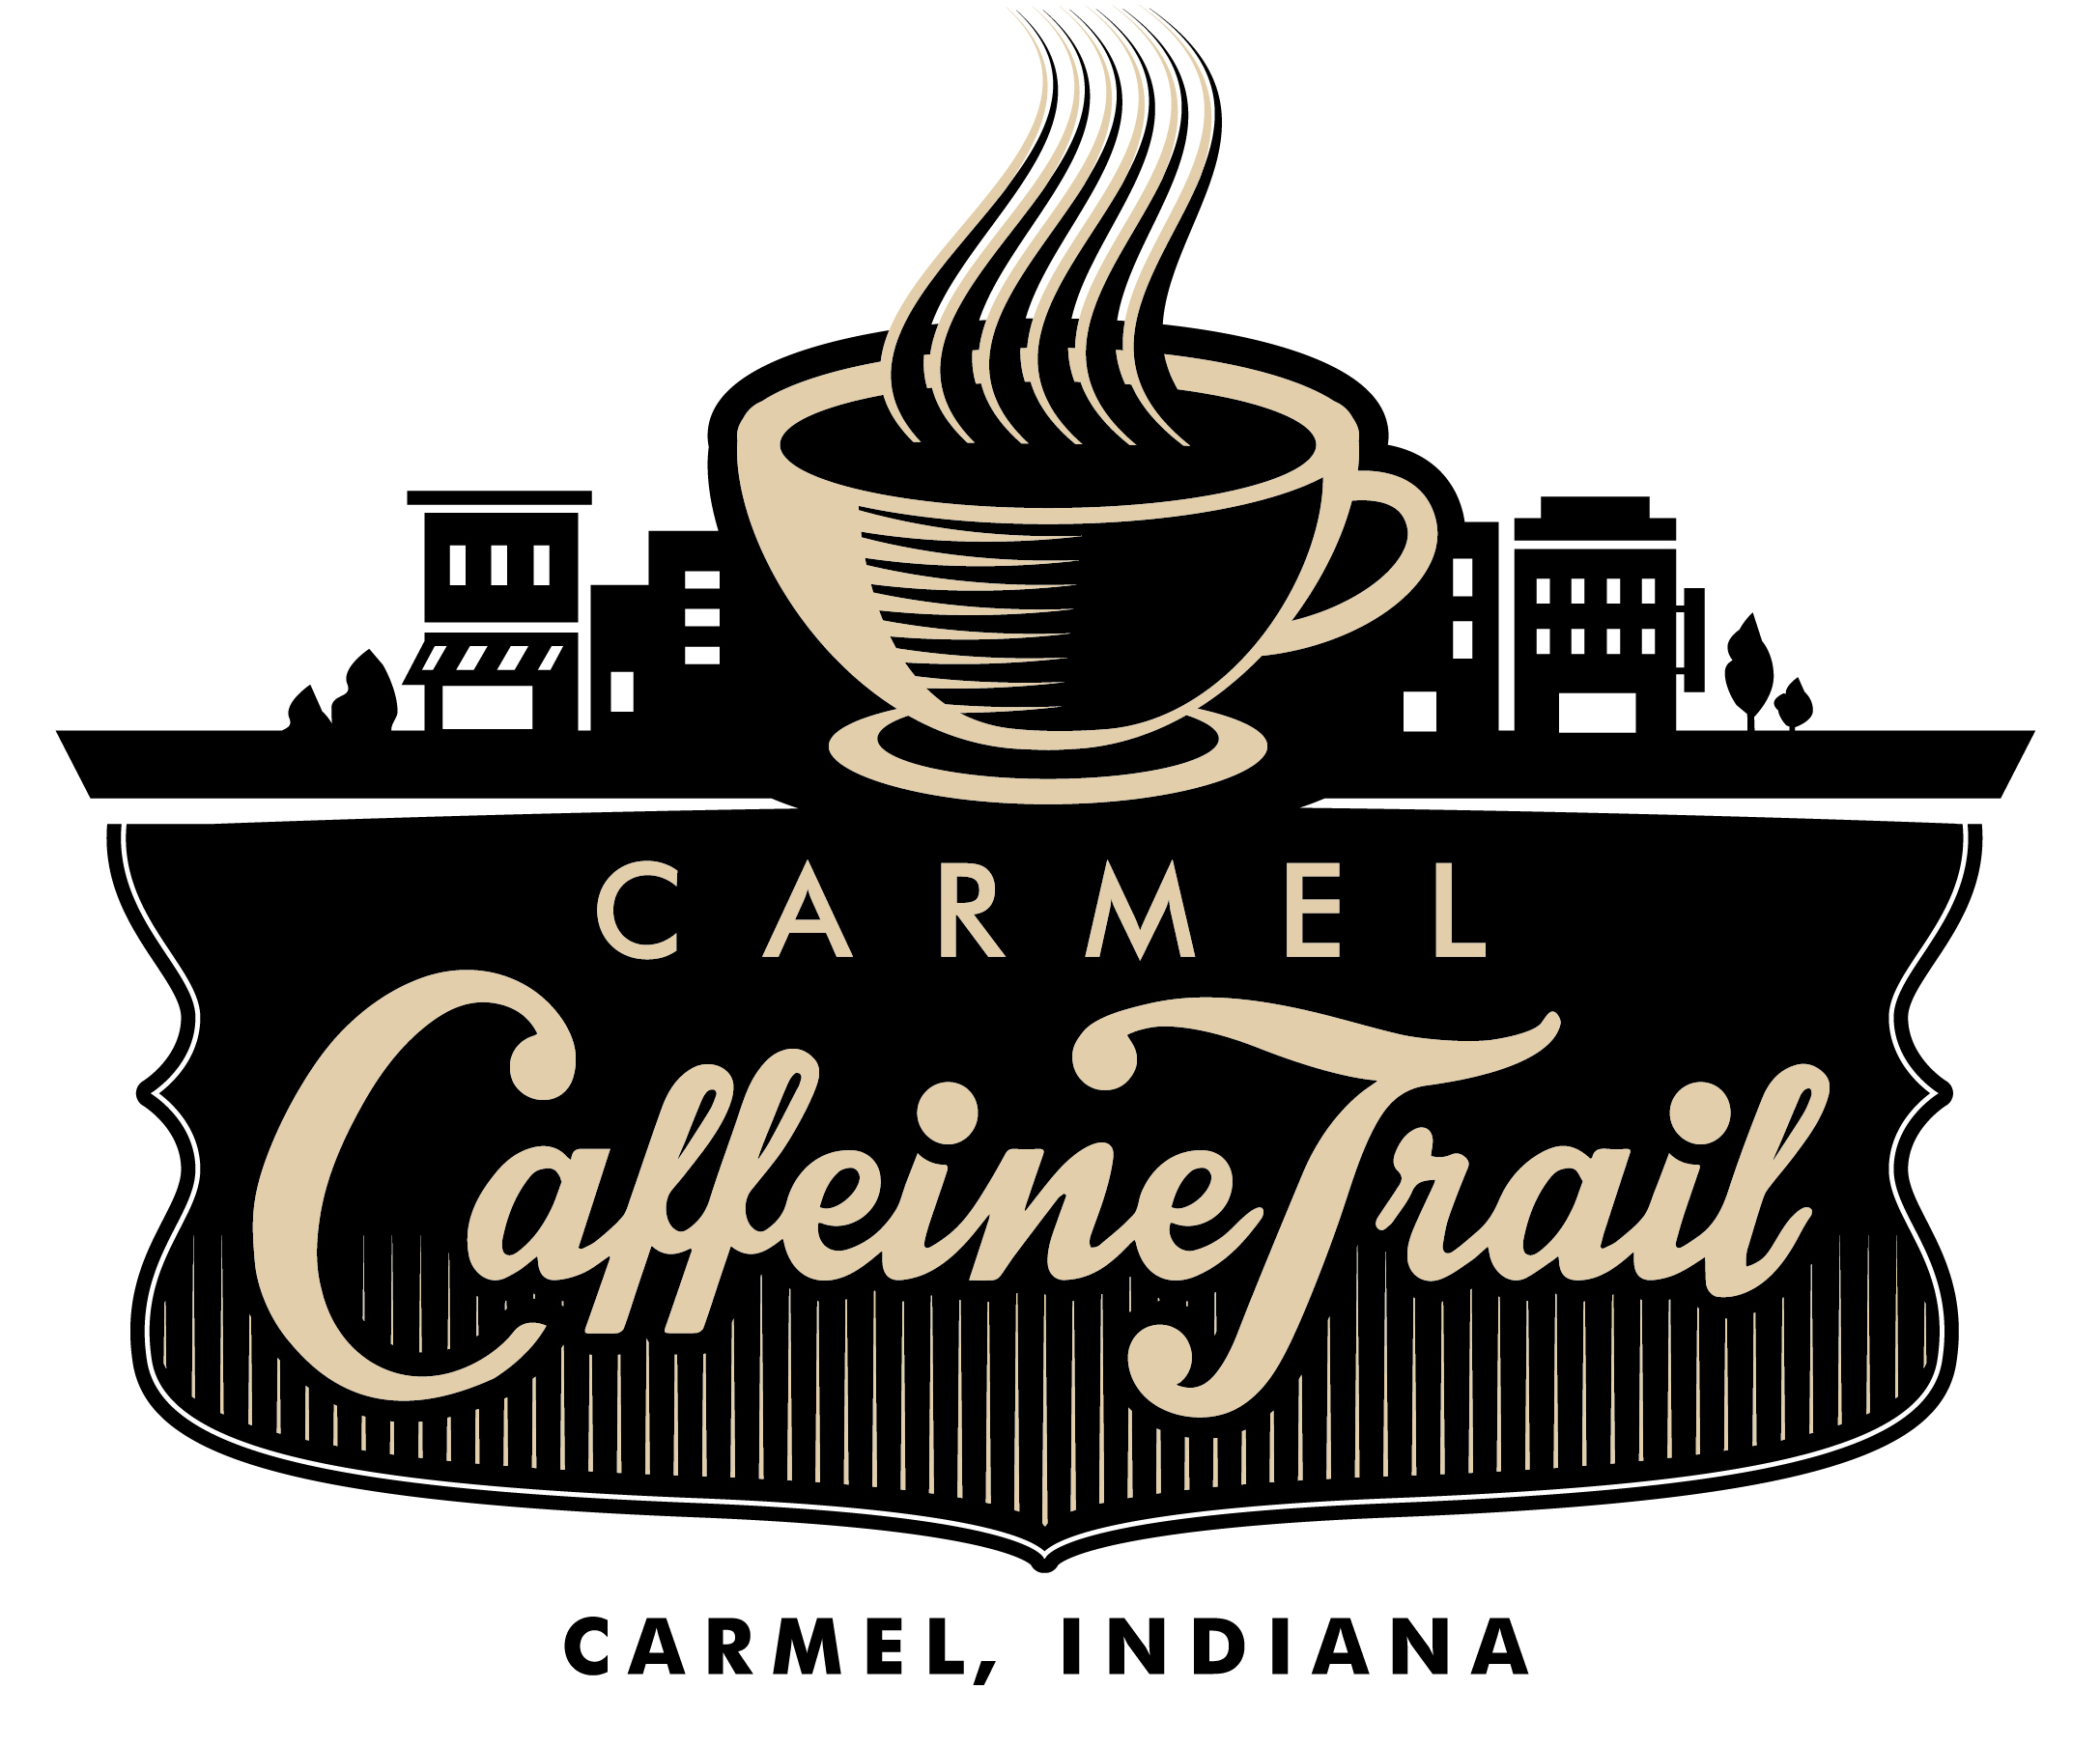 City of Carmel - Carmel Caffeine Trail